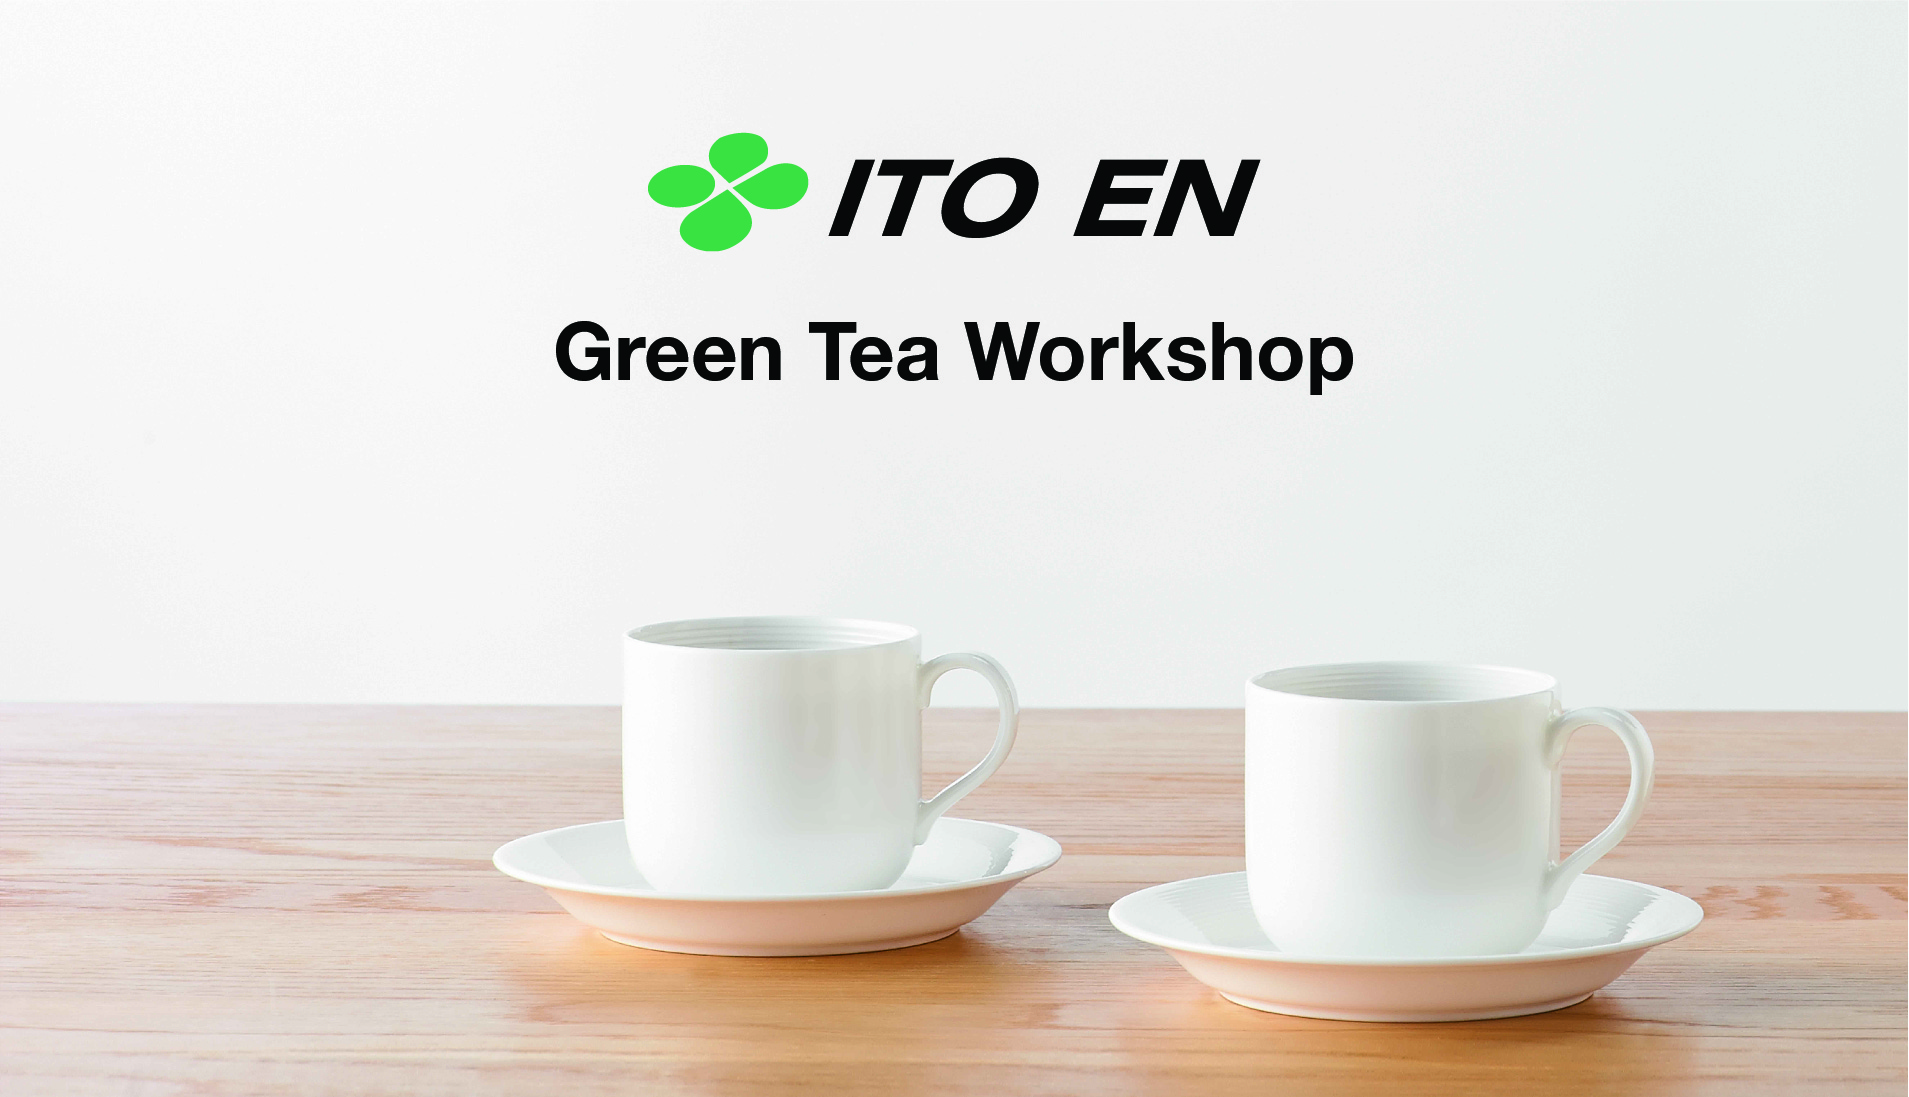 Ito En Green Tea Workshop News Muji